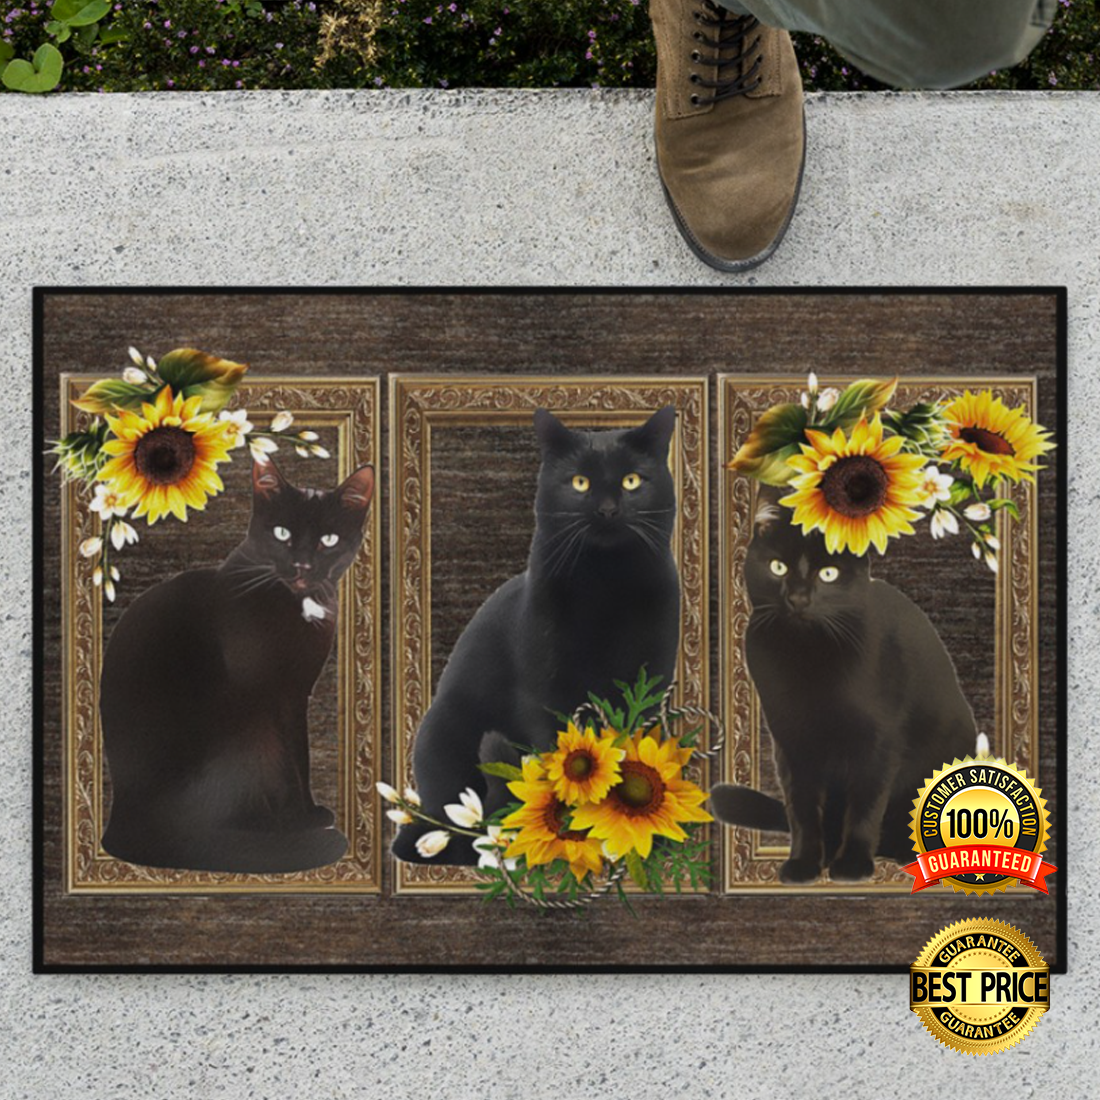 Black cat sunflower frame doormat 4